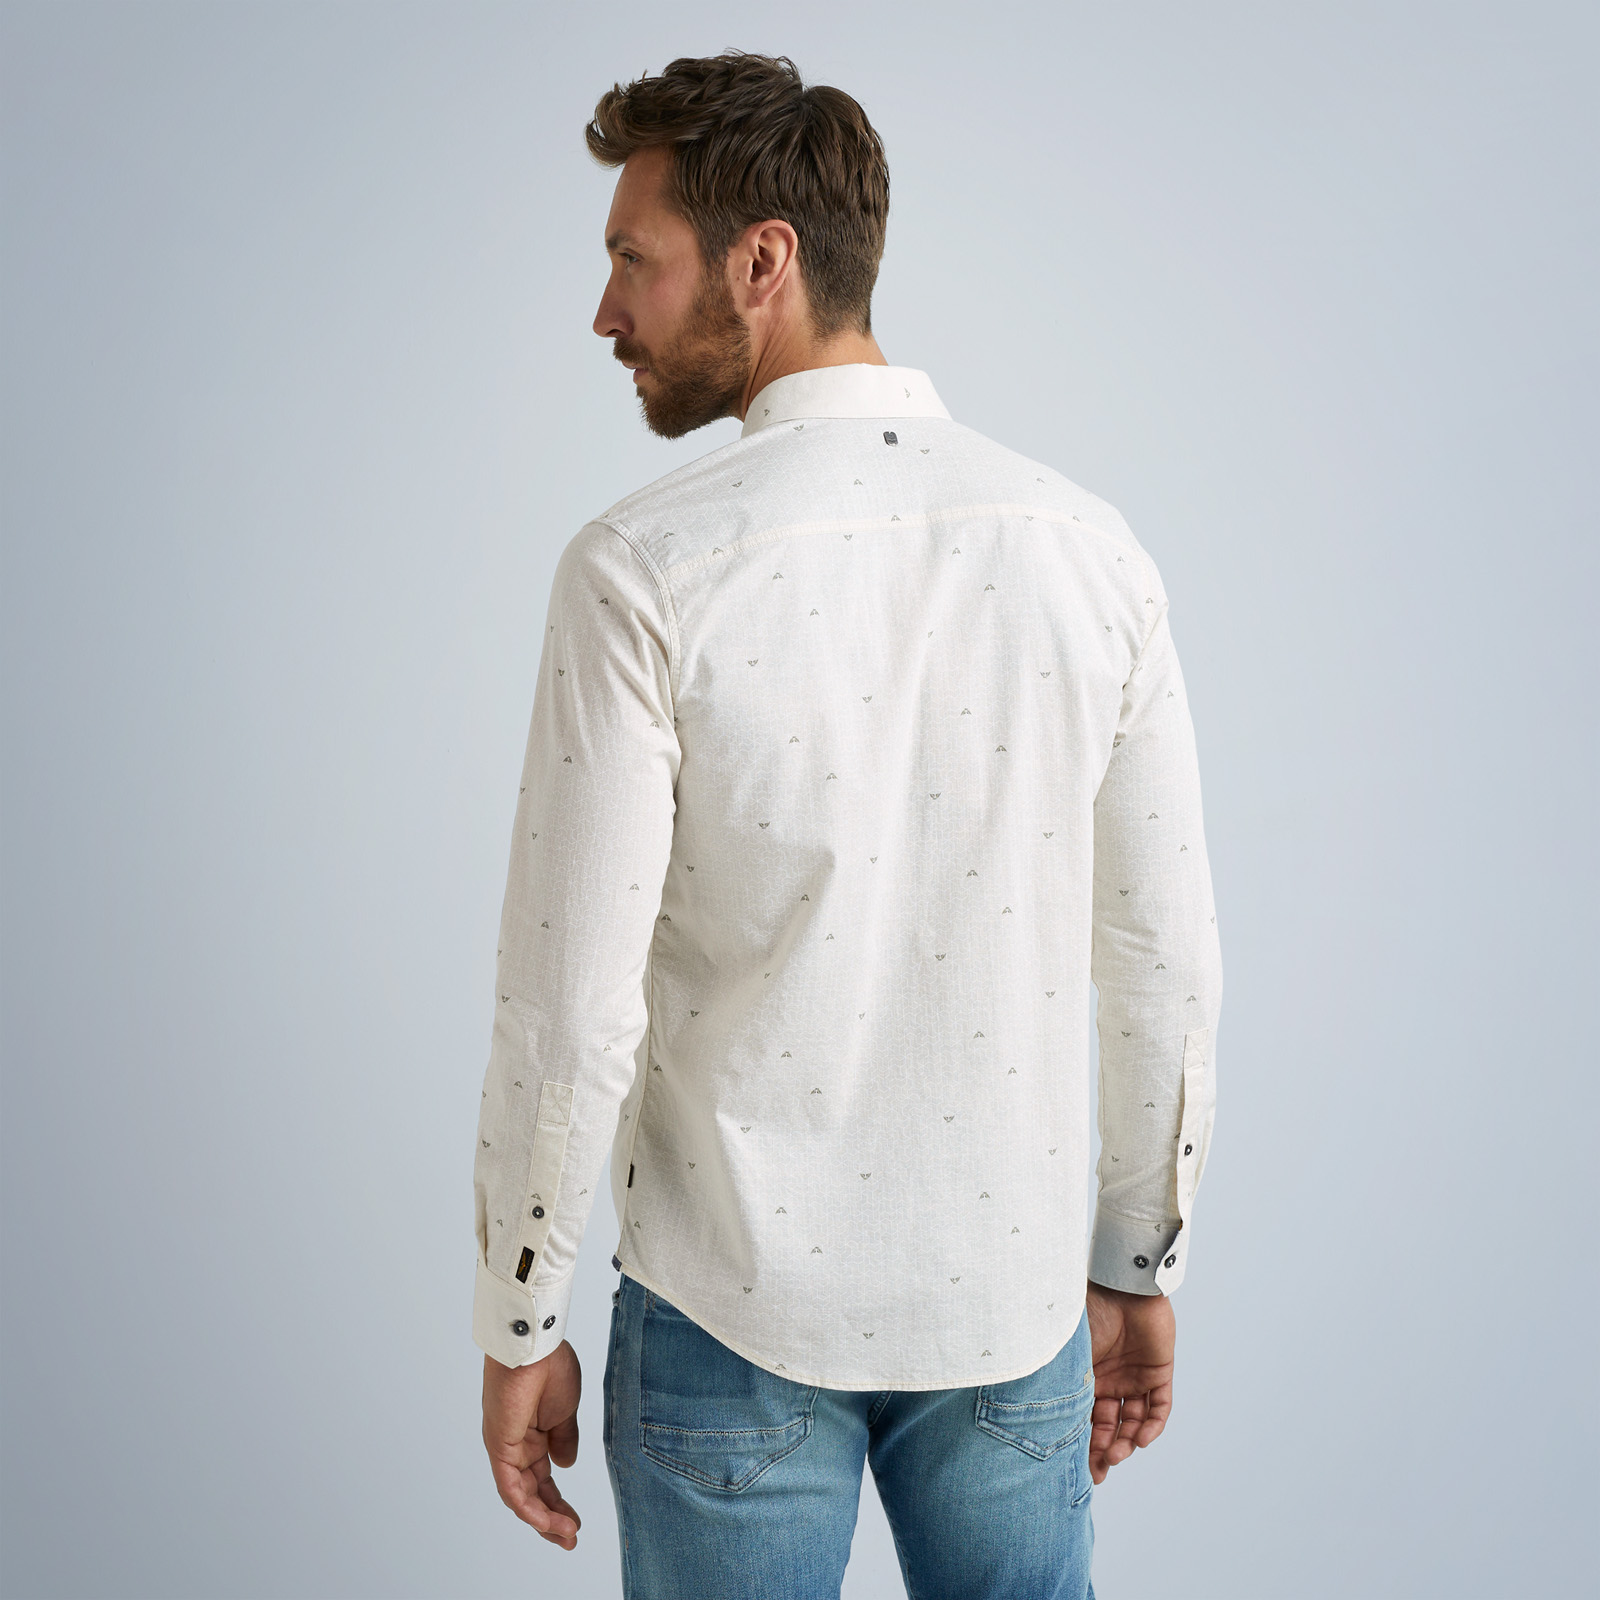 Het koud krijgen Paine Gillic is er PME LEGEND | Long Sleeve Cotton Shirt | Free shipping and returns